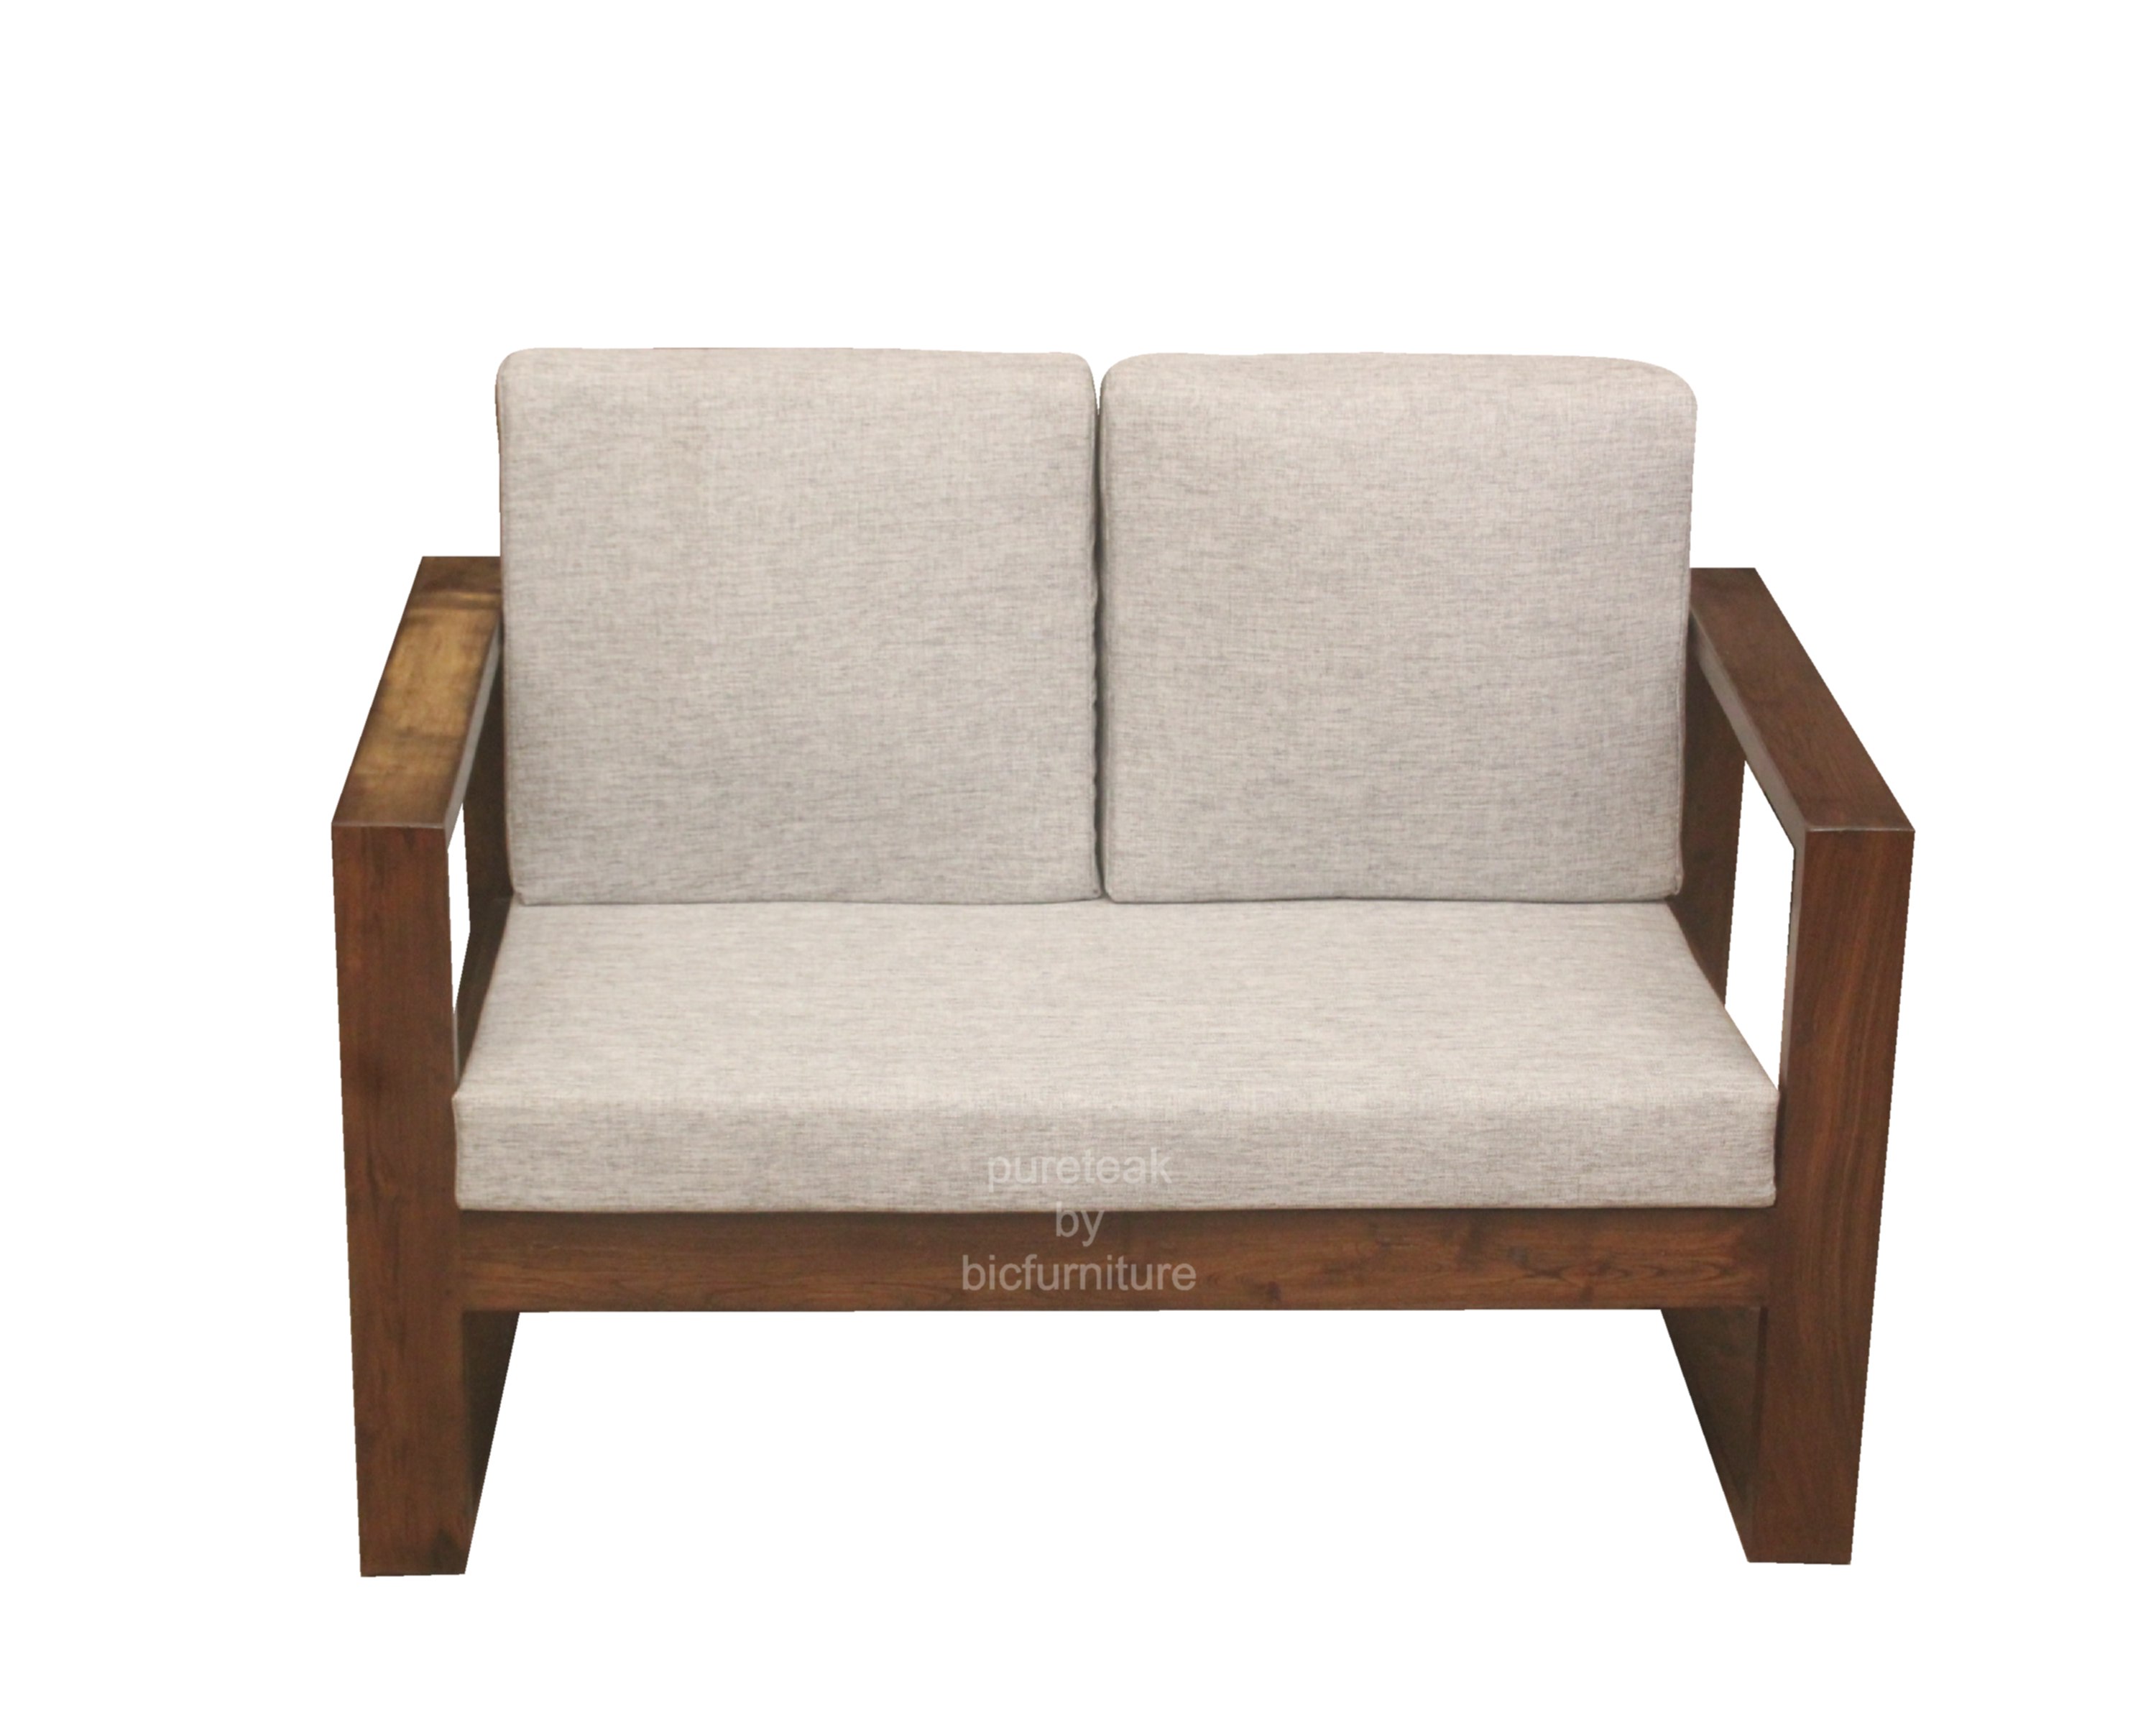 Wooden Sofa Set In Simple Design WS 67 Details BIC Furniture India